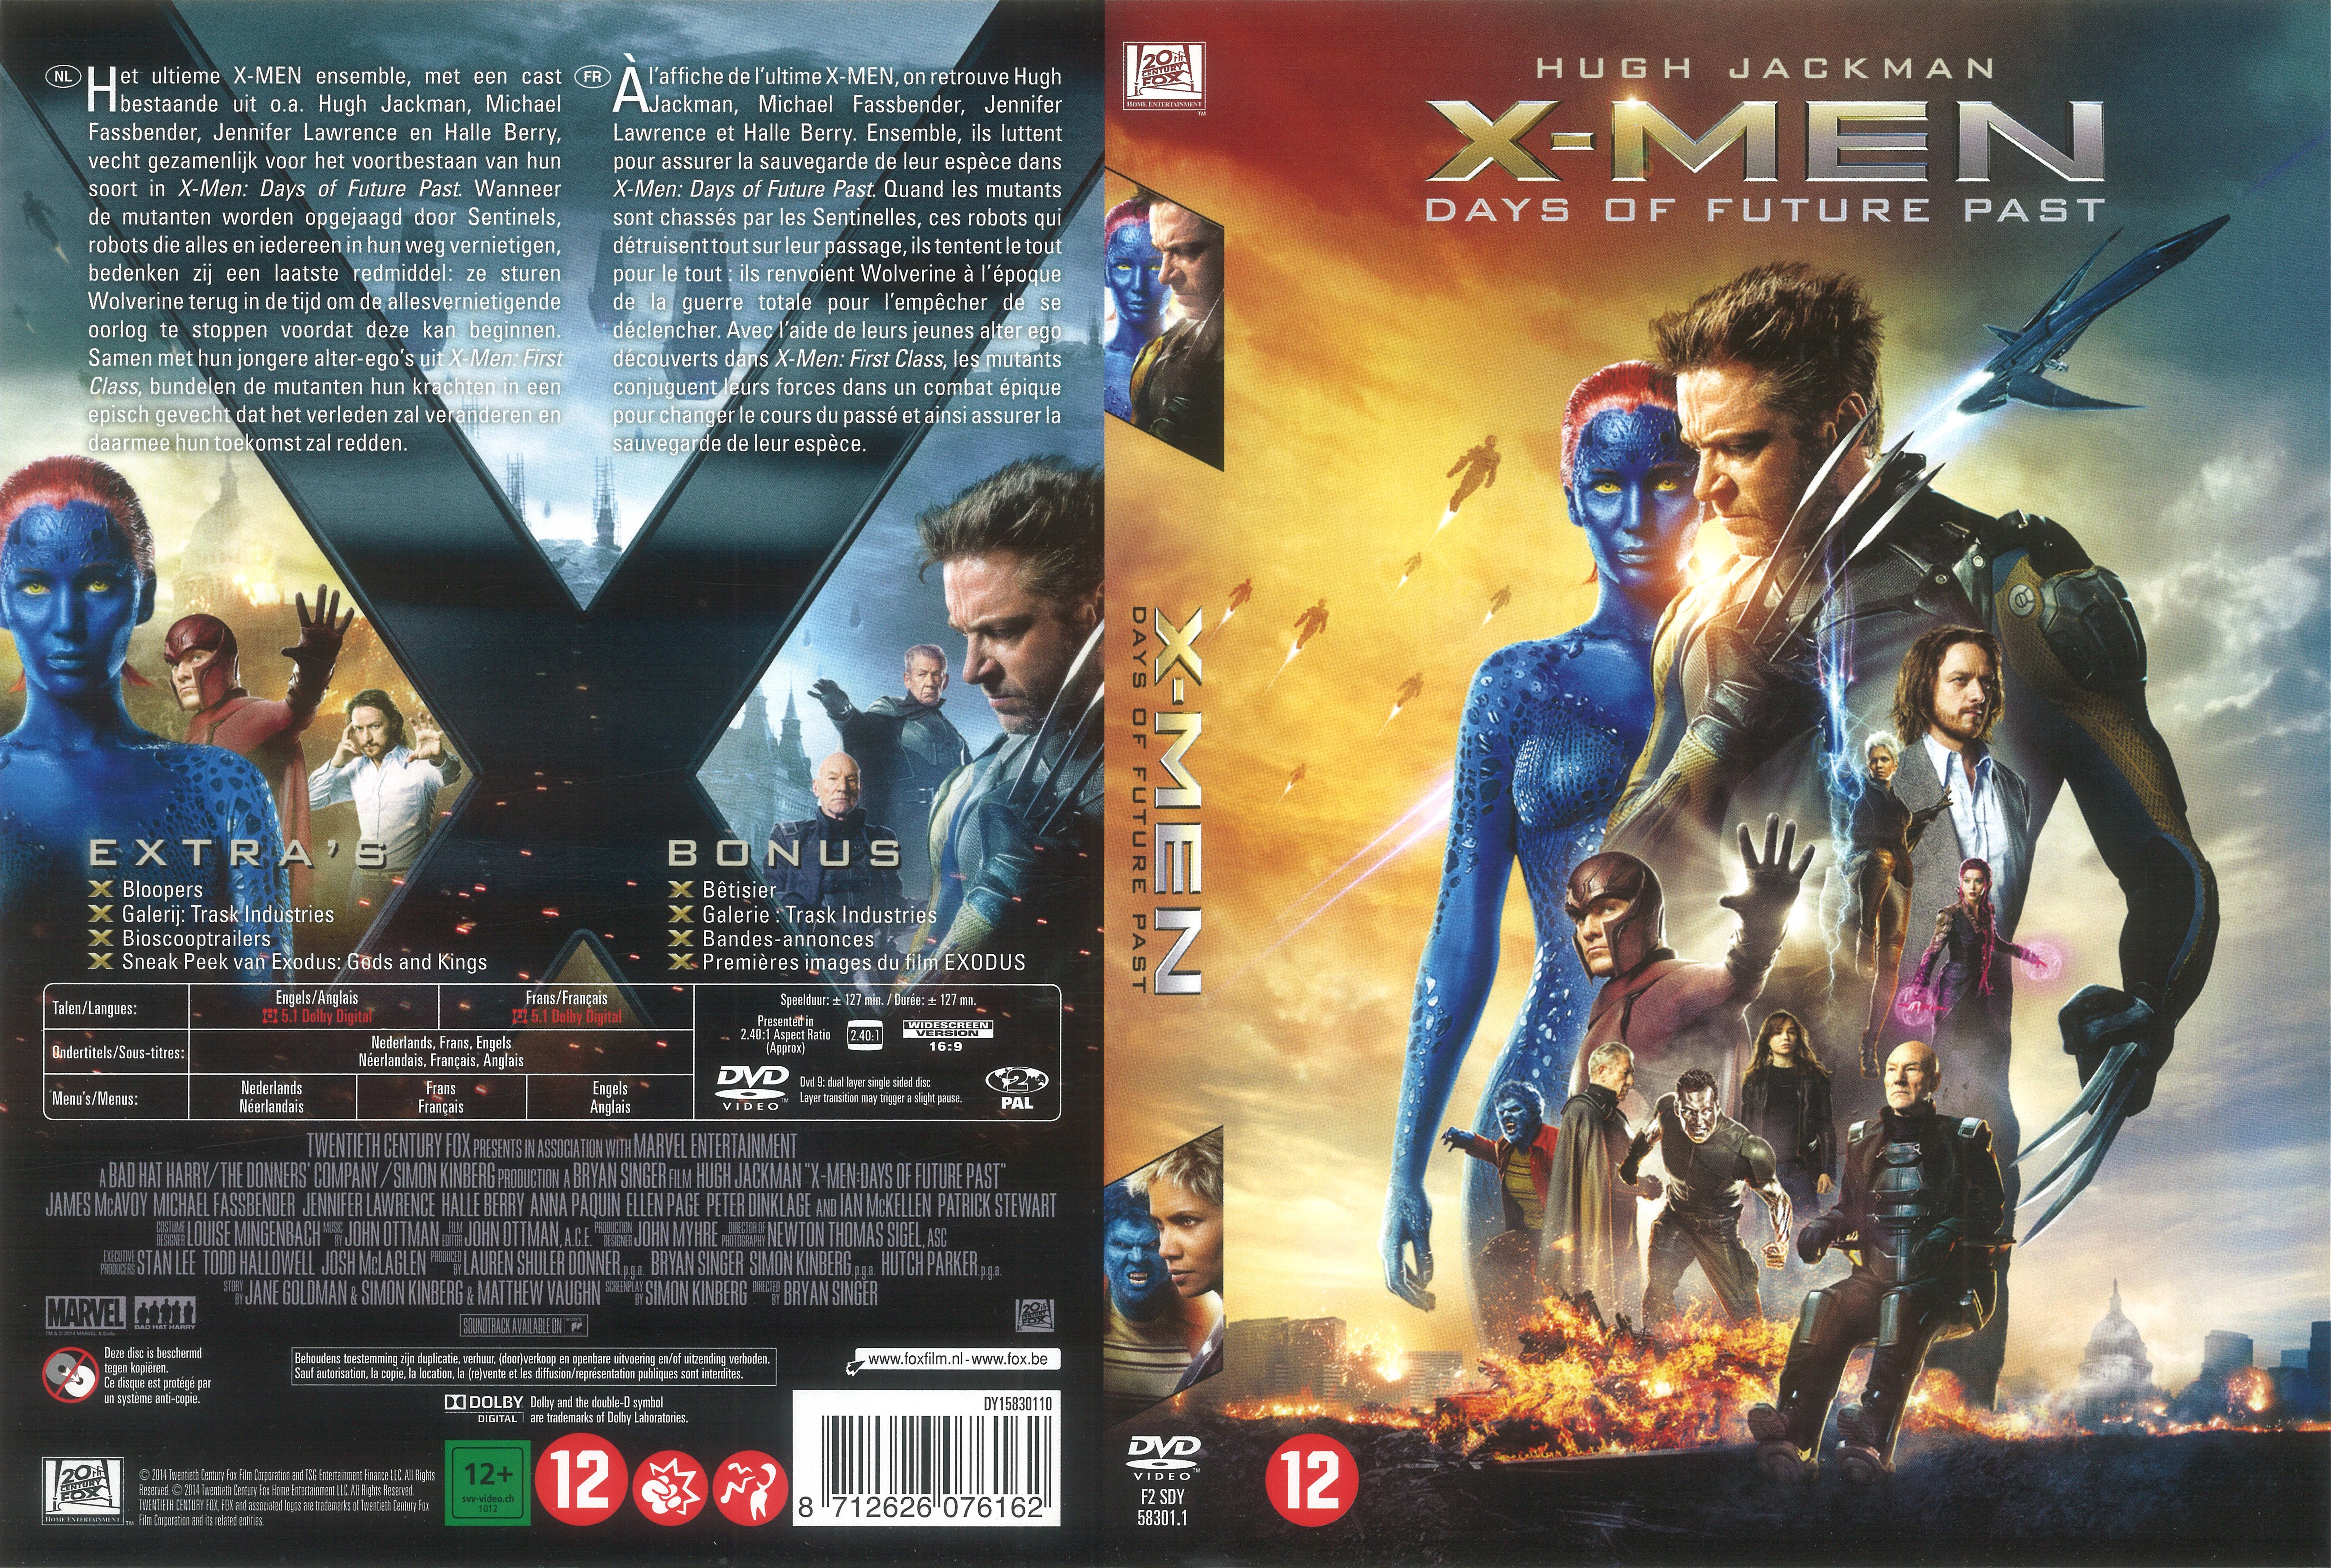 Jaquette DVD X-Men: Days of Future Past v2